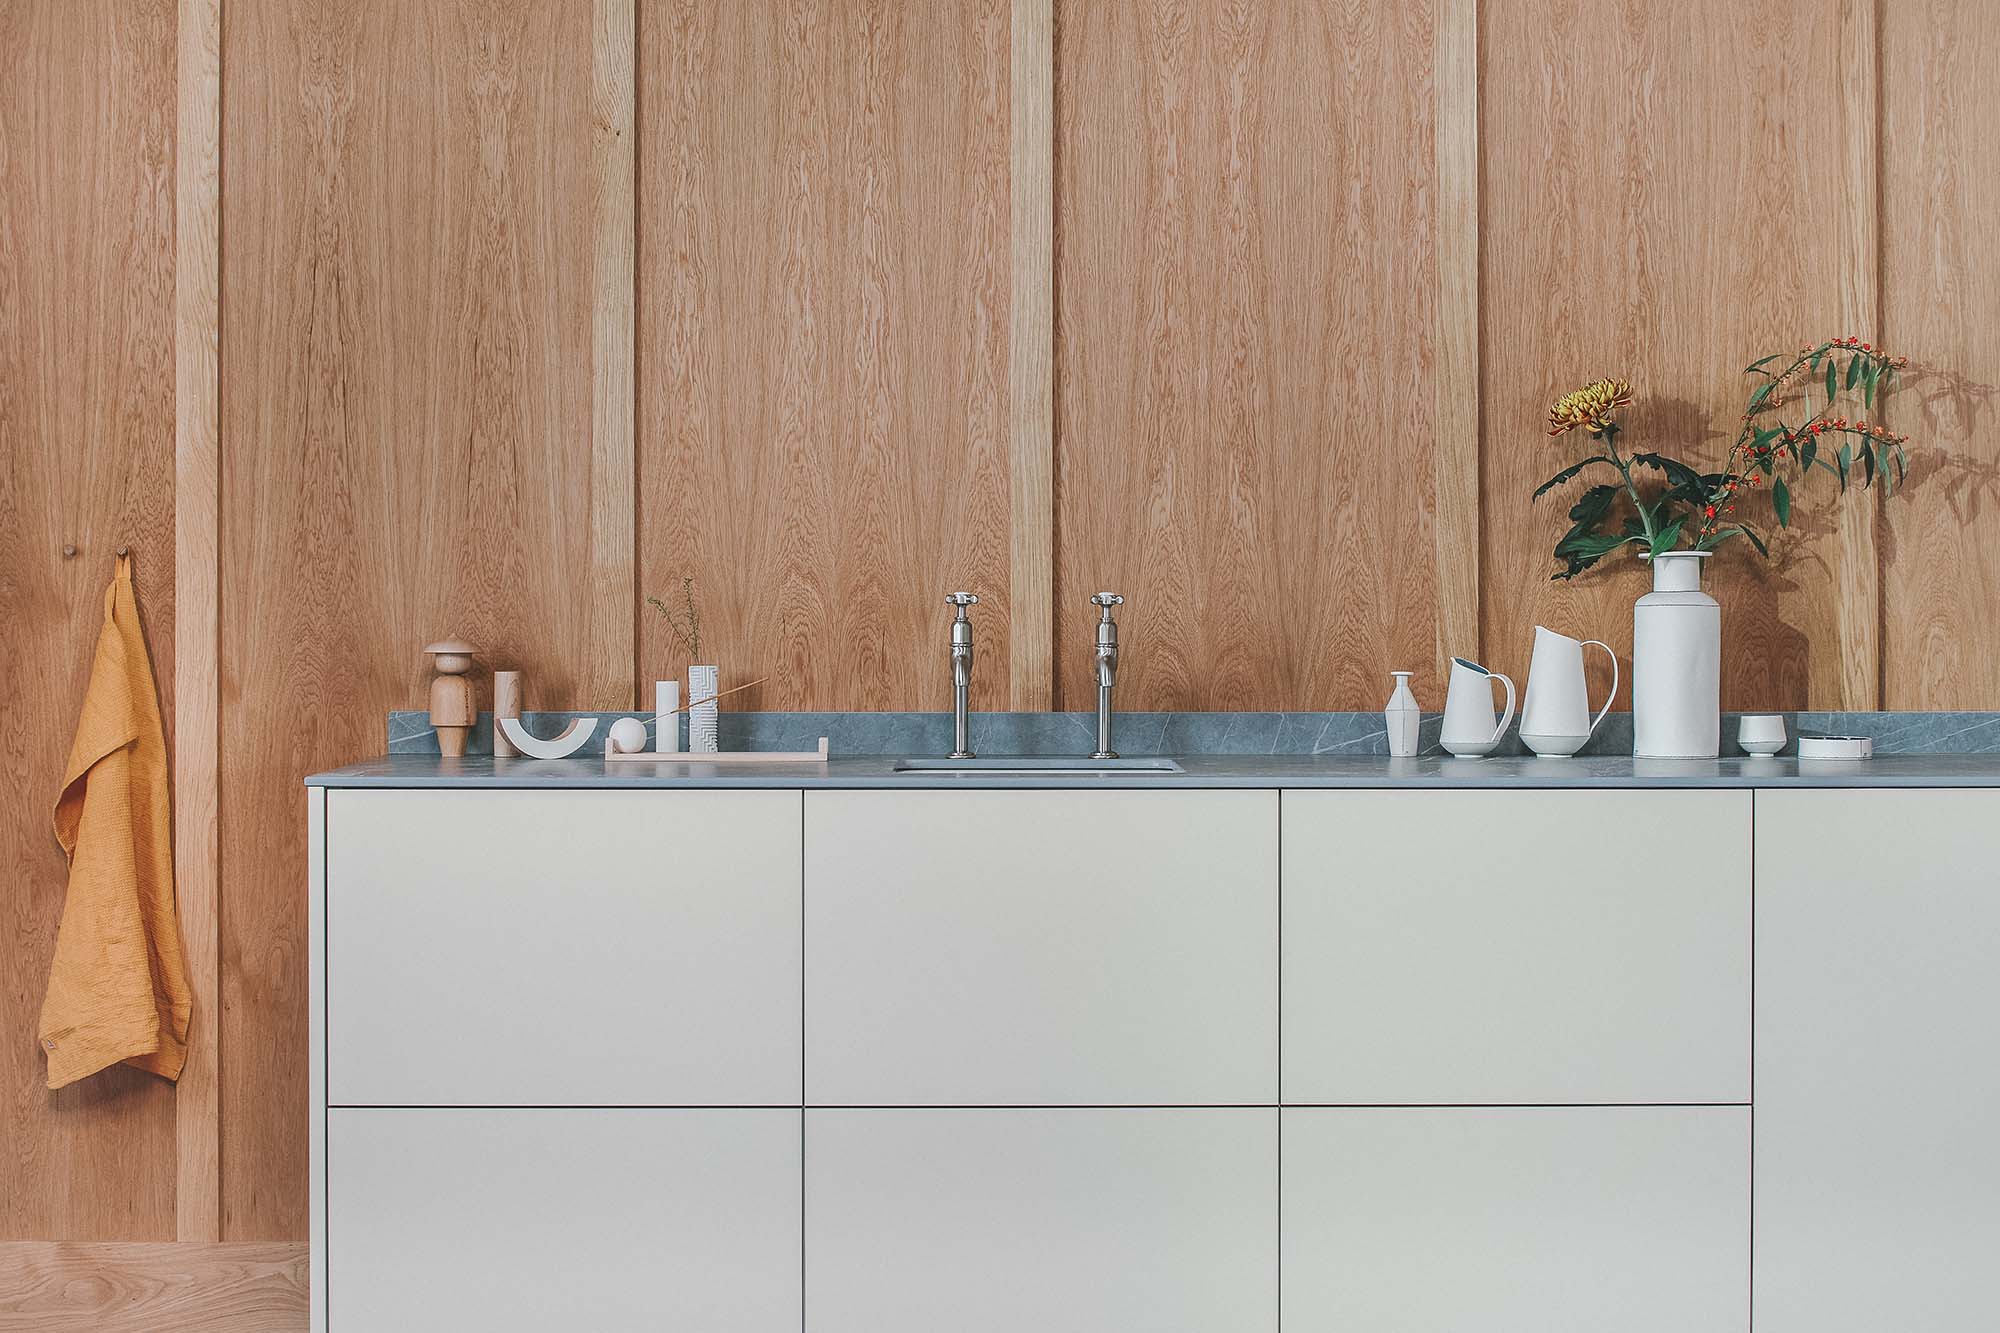 Husk's Avon Gorge Kitchen, featuring ply-edged FENIX kitchen fronts in Bianco Male.